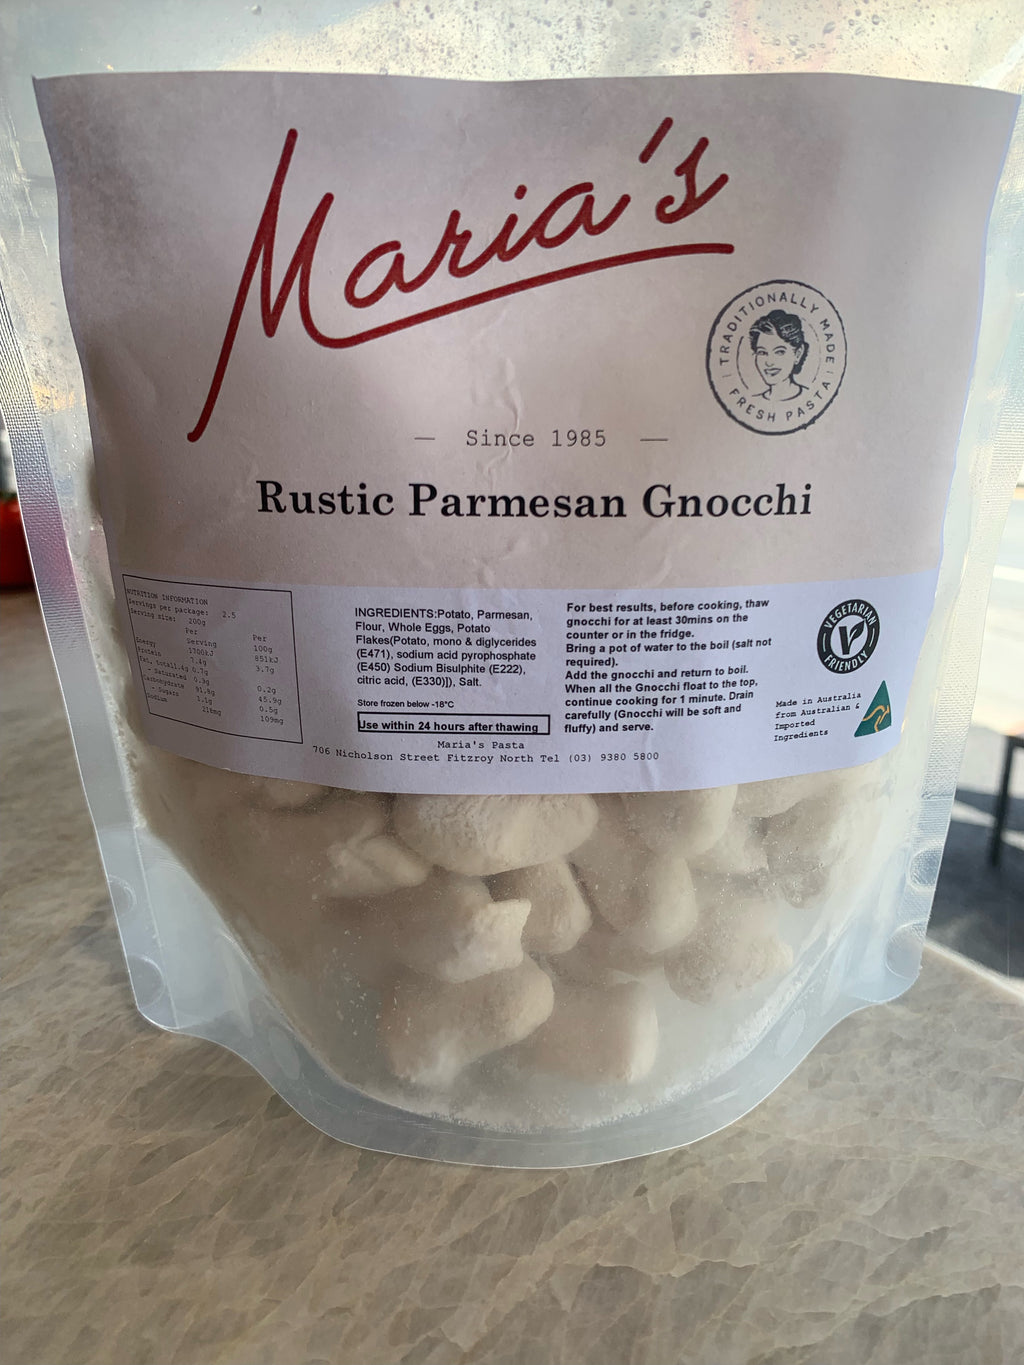 Maria's Pasta product image rustic parmesan gnocchi in bag